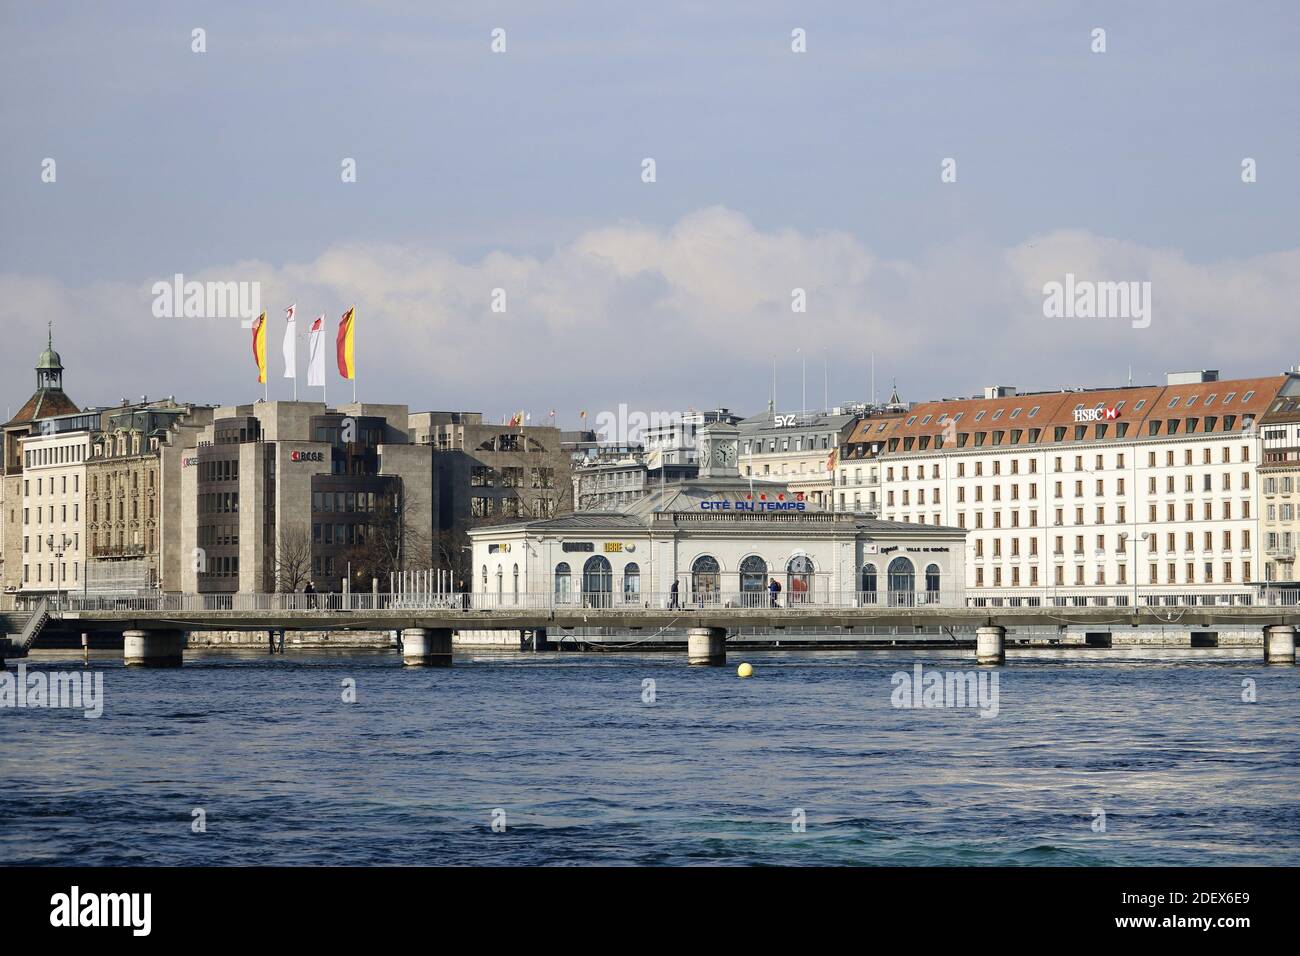 GENEVA, SWITZERLAND - Feb 20, 2018: City trip in Geneva during the winter. Picture shows buildings at the Lake of Geneva. Stock Photo